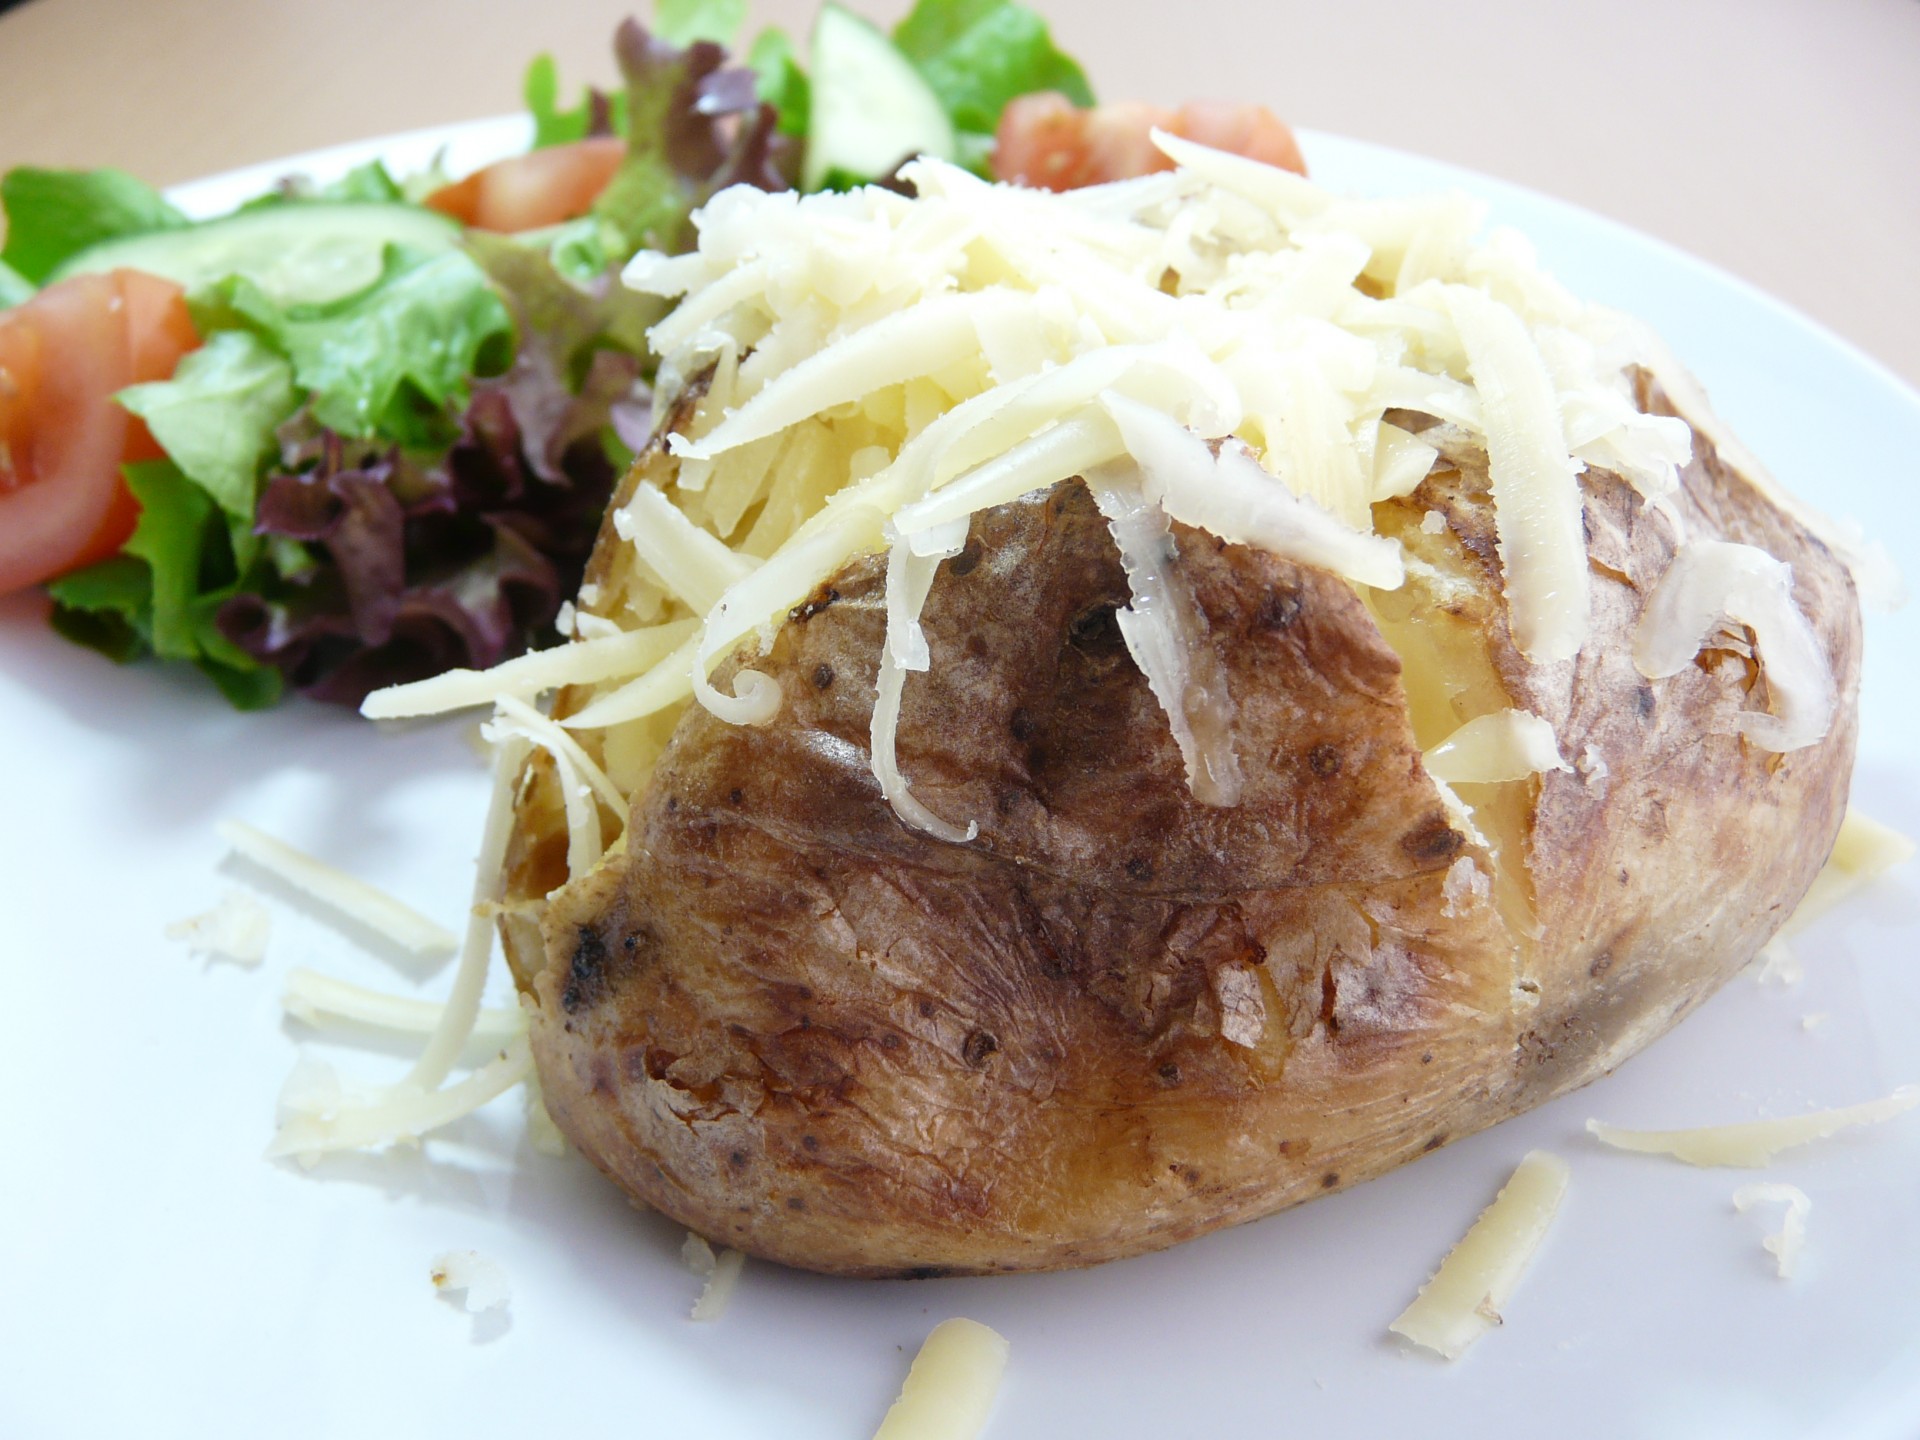 Caramelized Onion-Stuffed Baked Potato